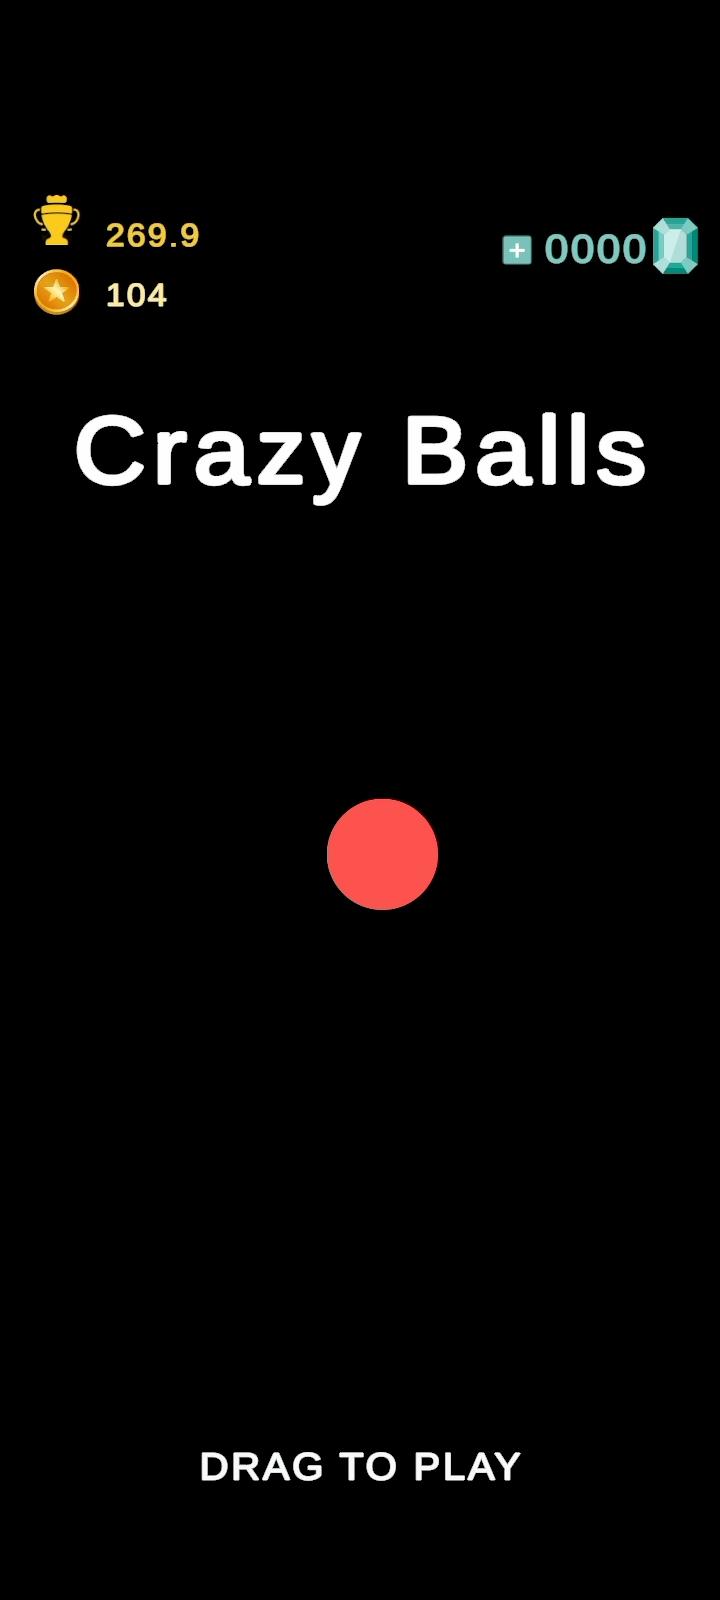 Crazy Balls real or fake